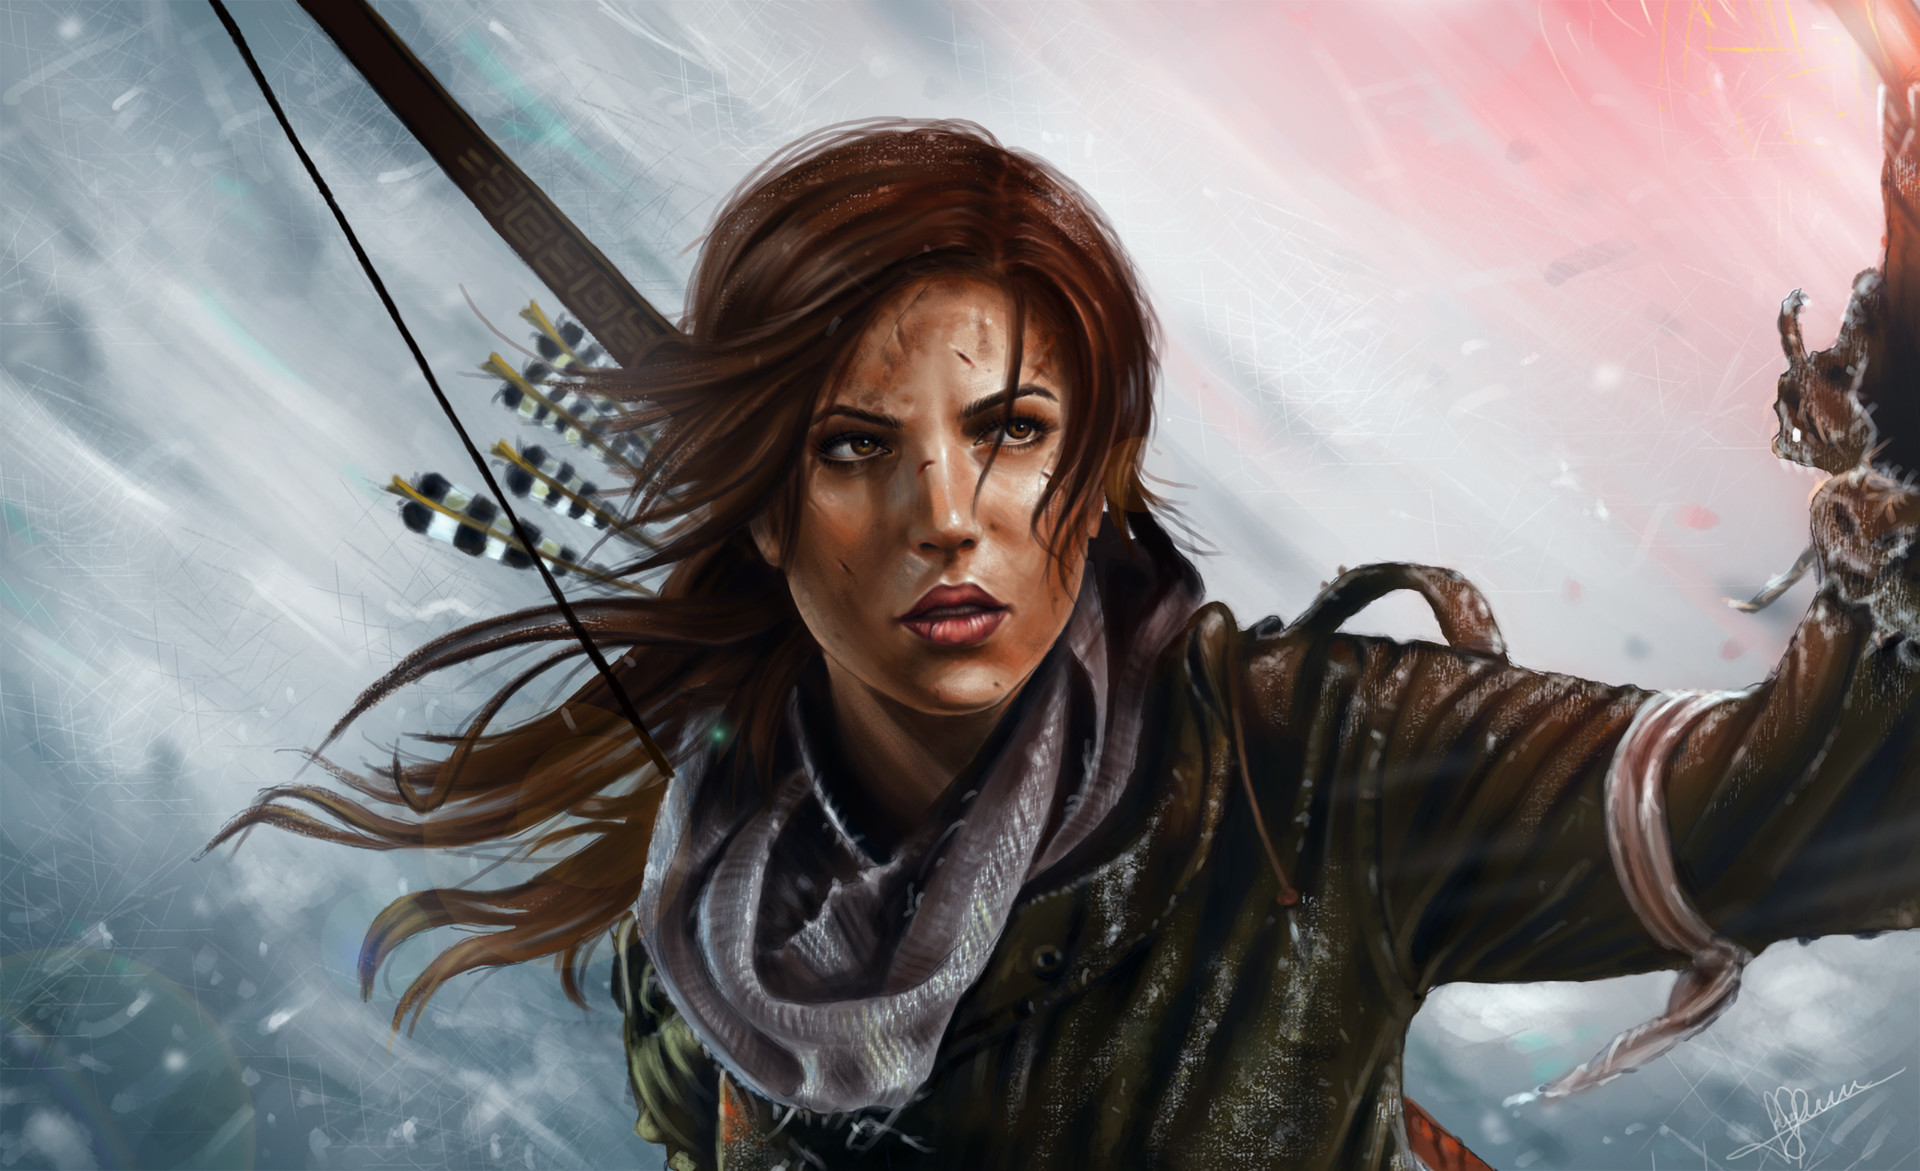 Tomb Raider Lara Croft Art, HD Games, 4k Wallpapers, Images ...